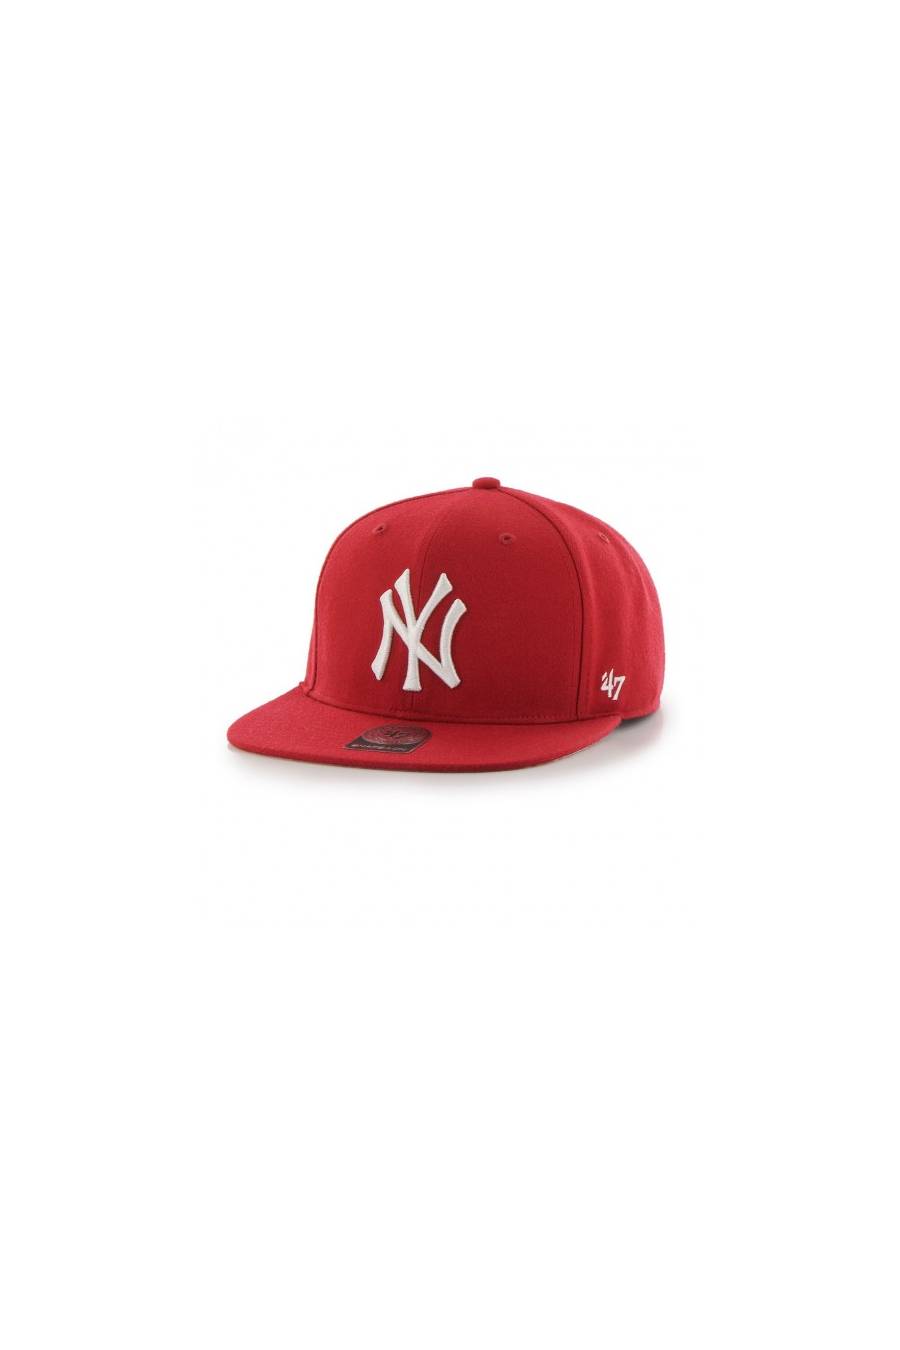 Gorra Plana New York Yankees MLB - Unisex